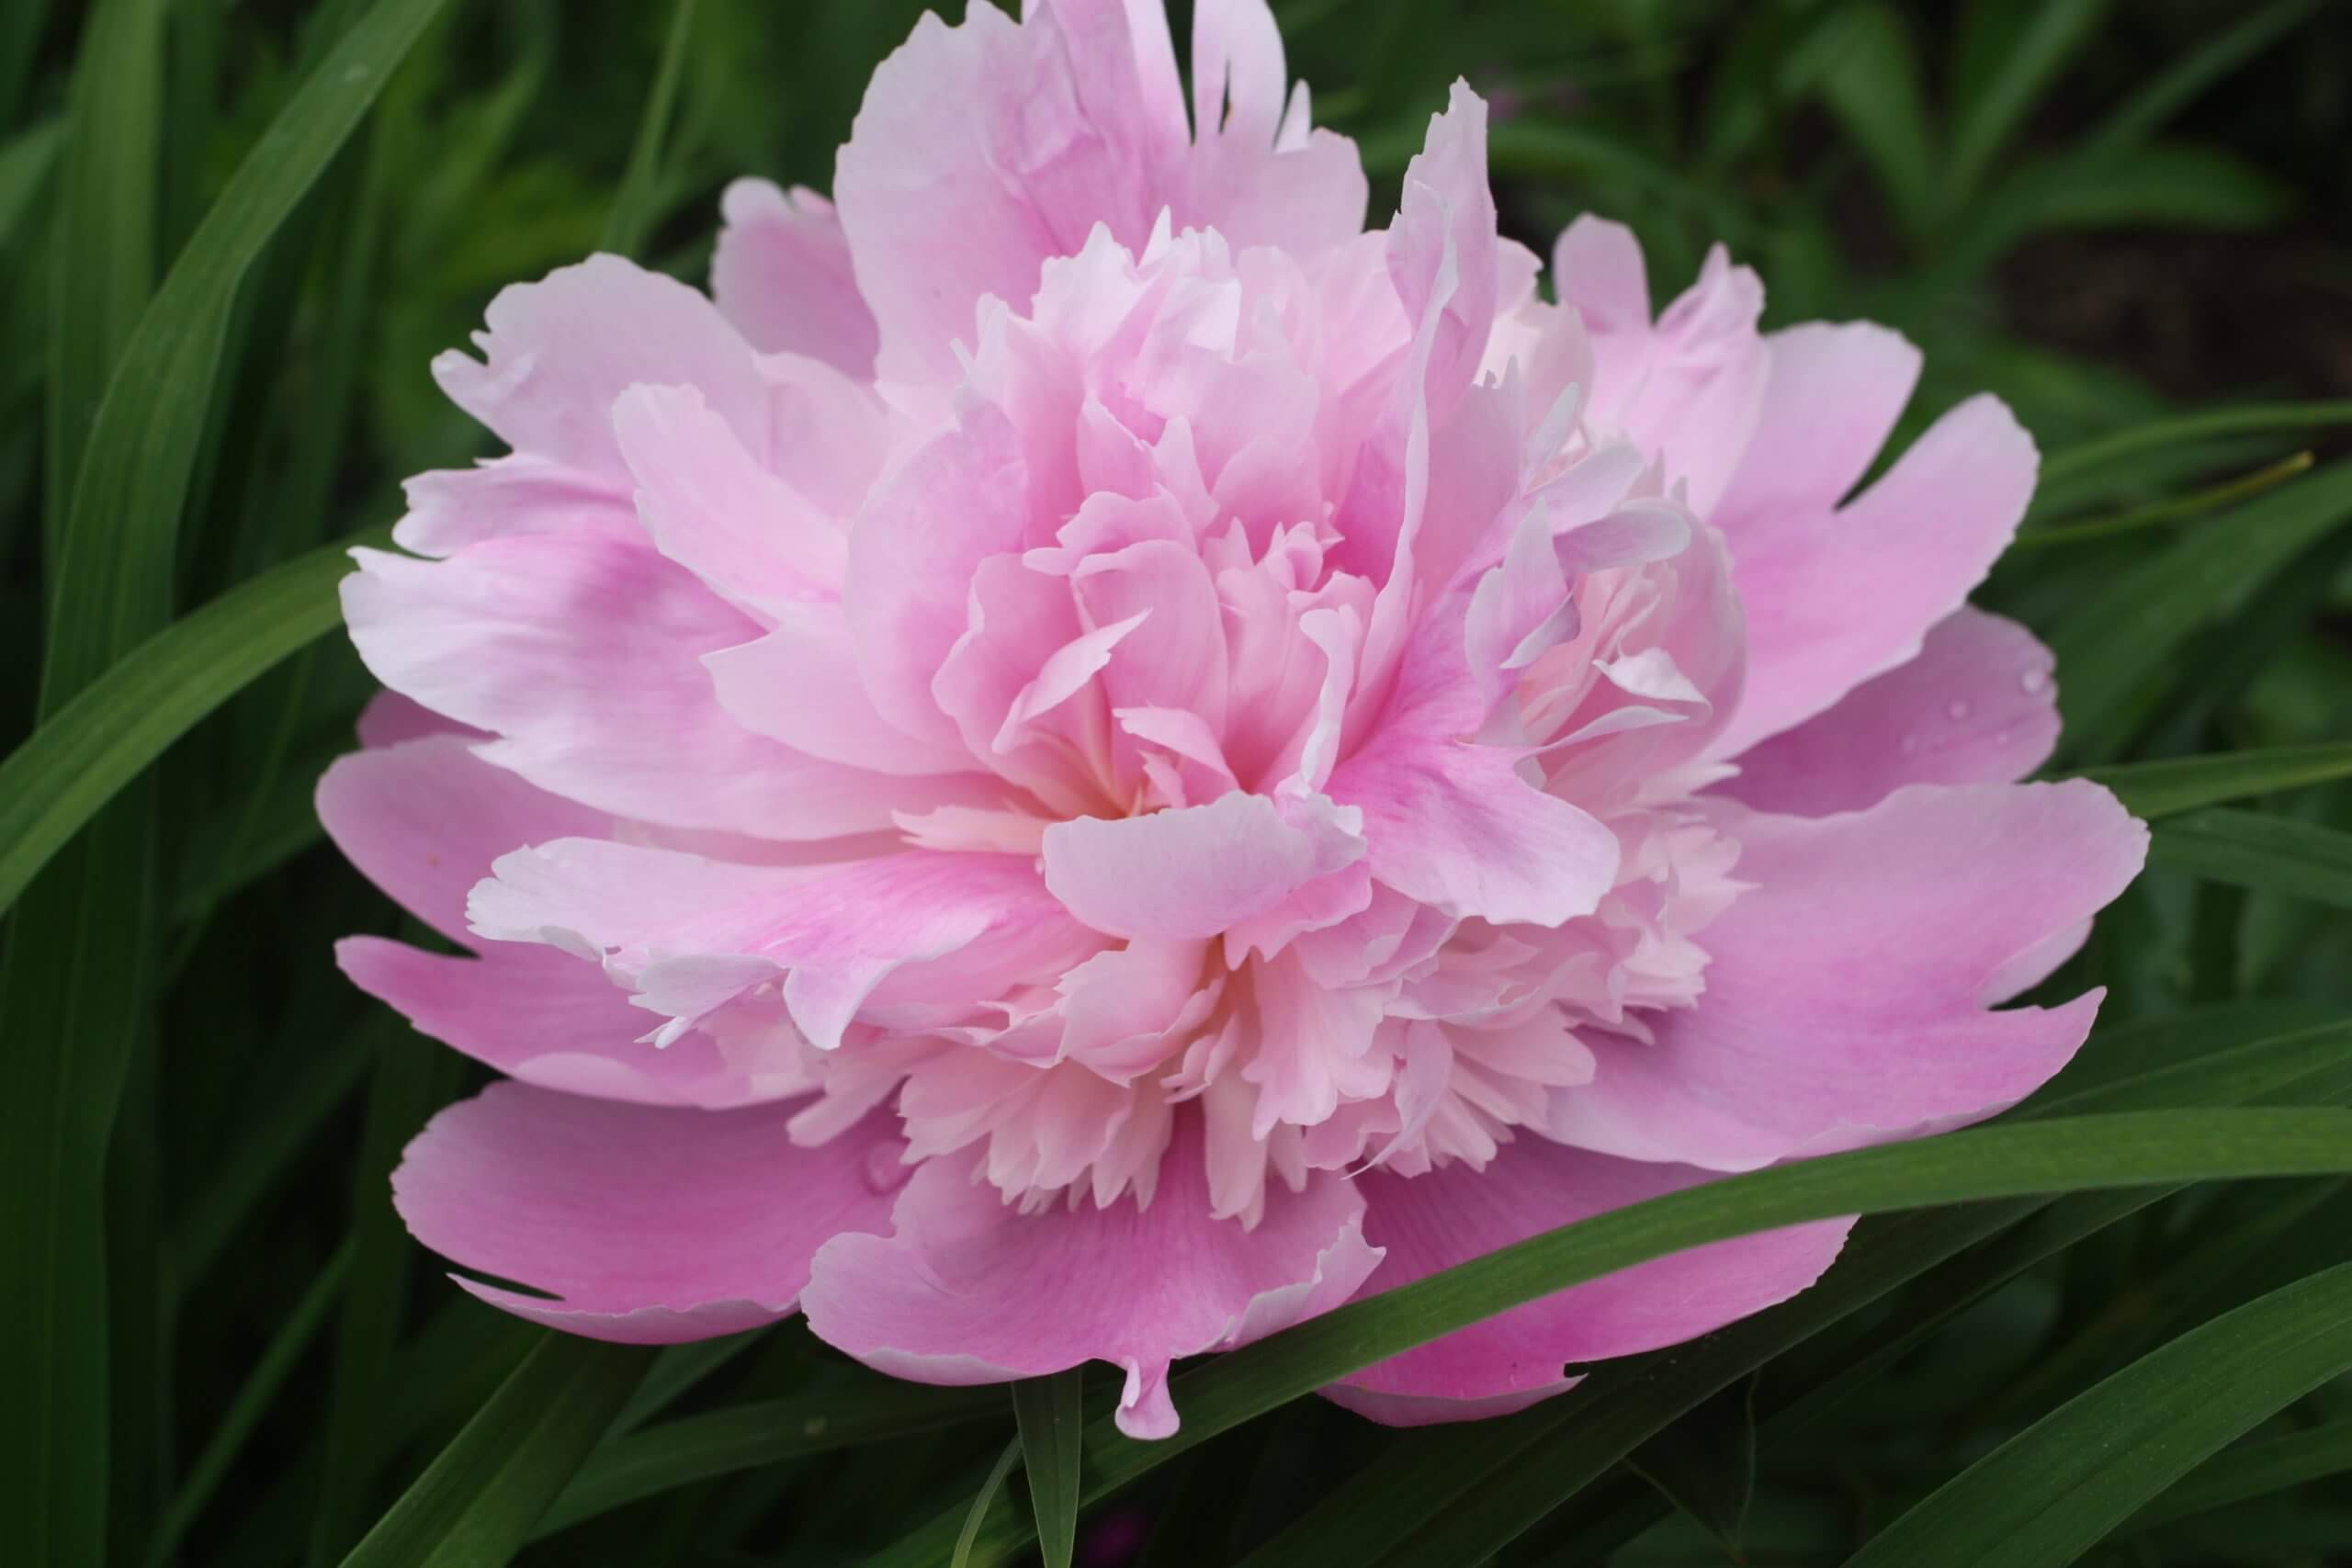 The pink peony 'Monsieur Jules Elie' has bomb-type flowers. (Image by Jessie Keith)